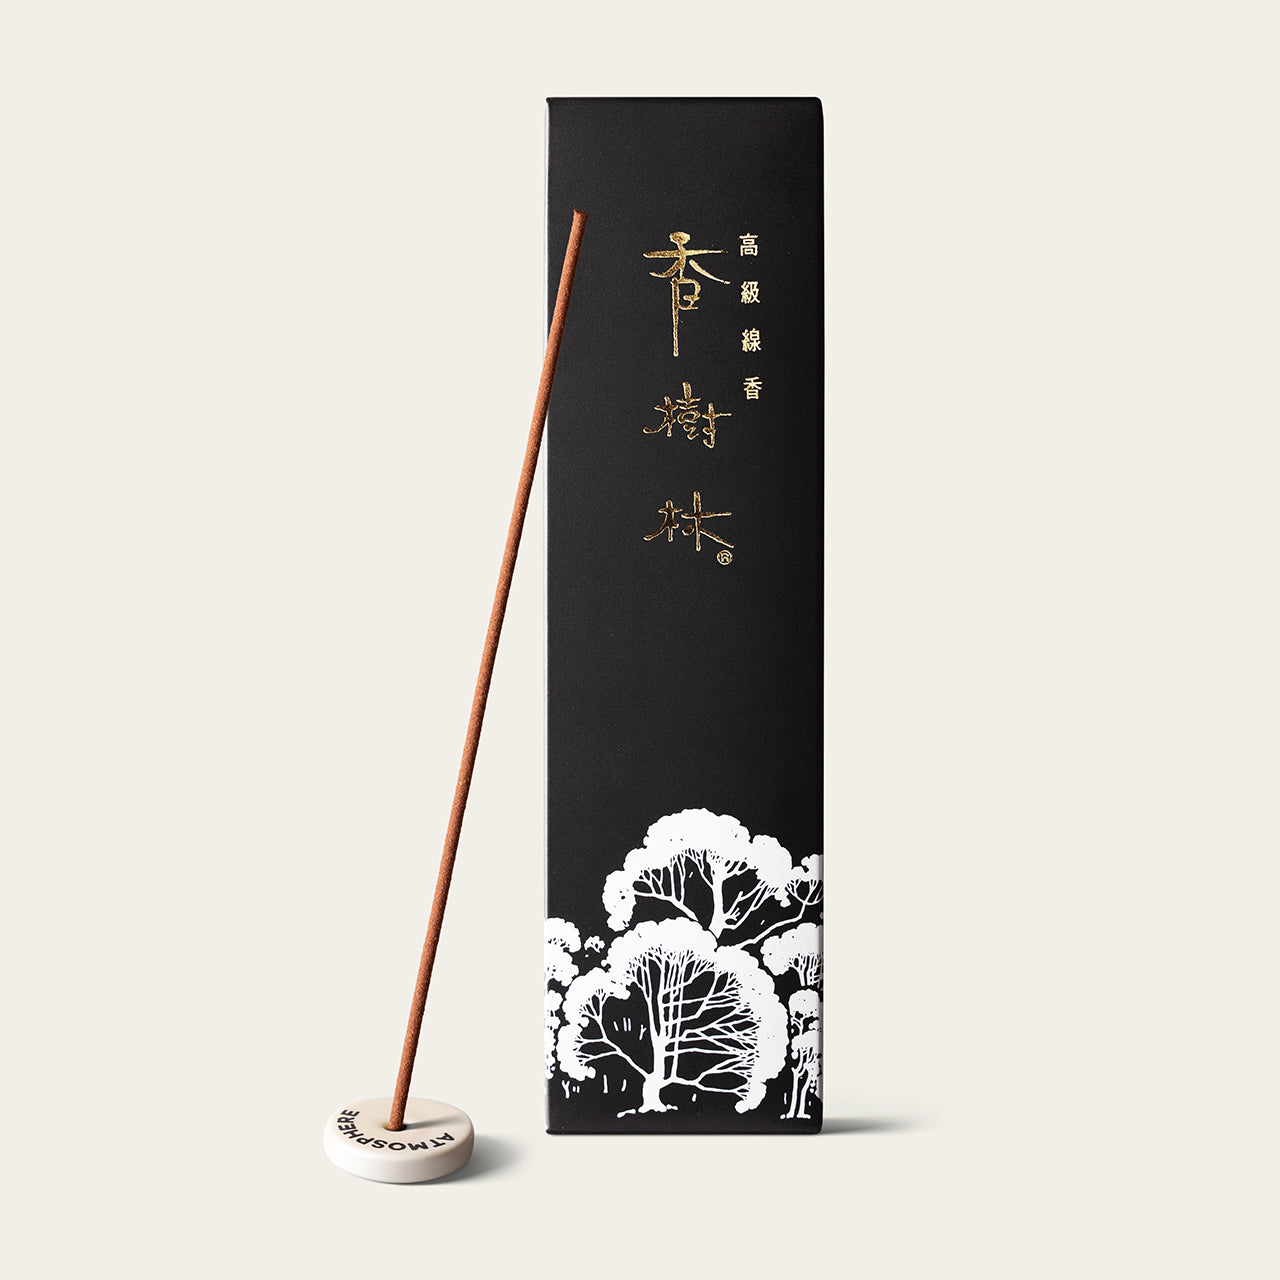 Gyokushodo Kojurin Japanese incense sticks (25 sticks) with Atmosphere ceramic incense holder